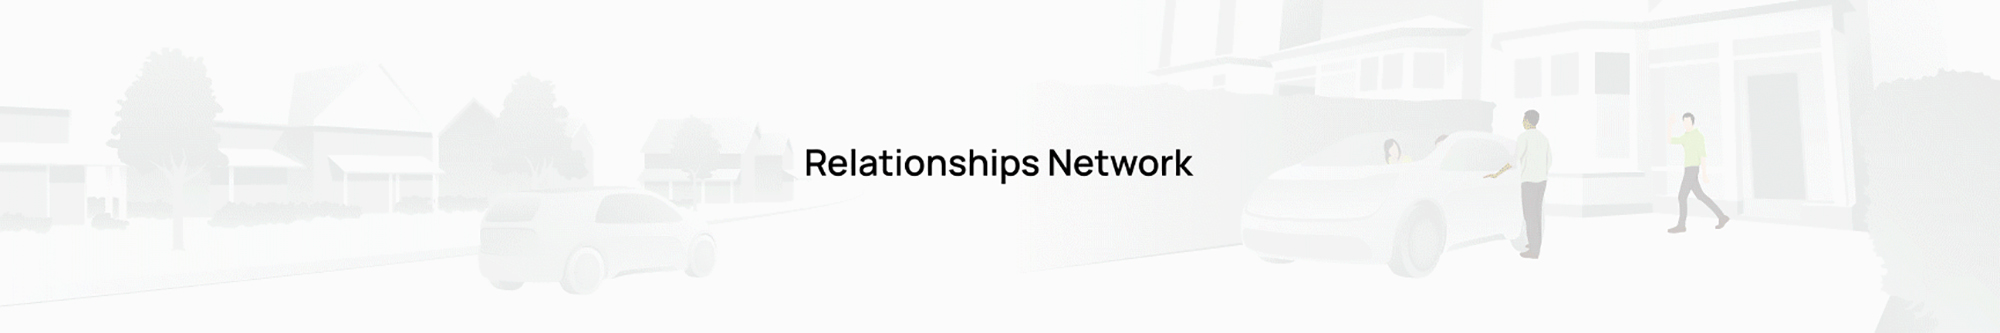 Relationship network animation